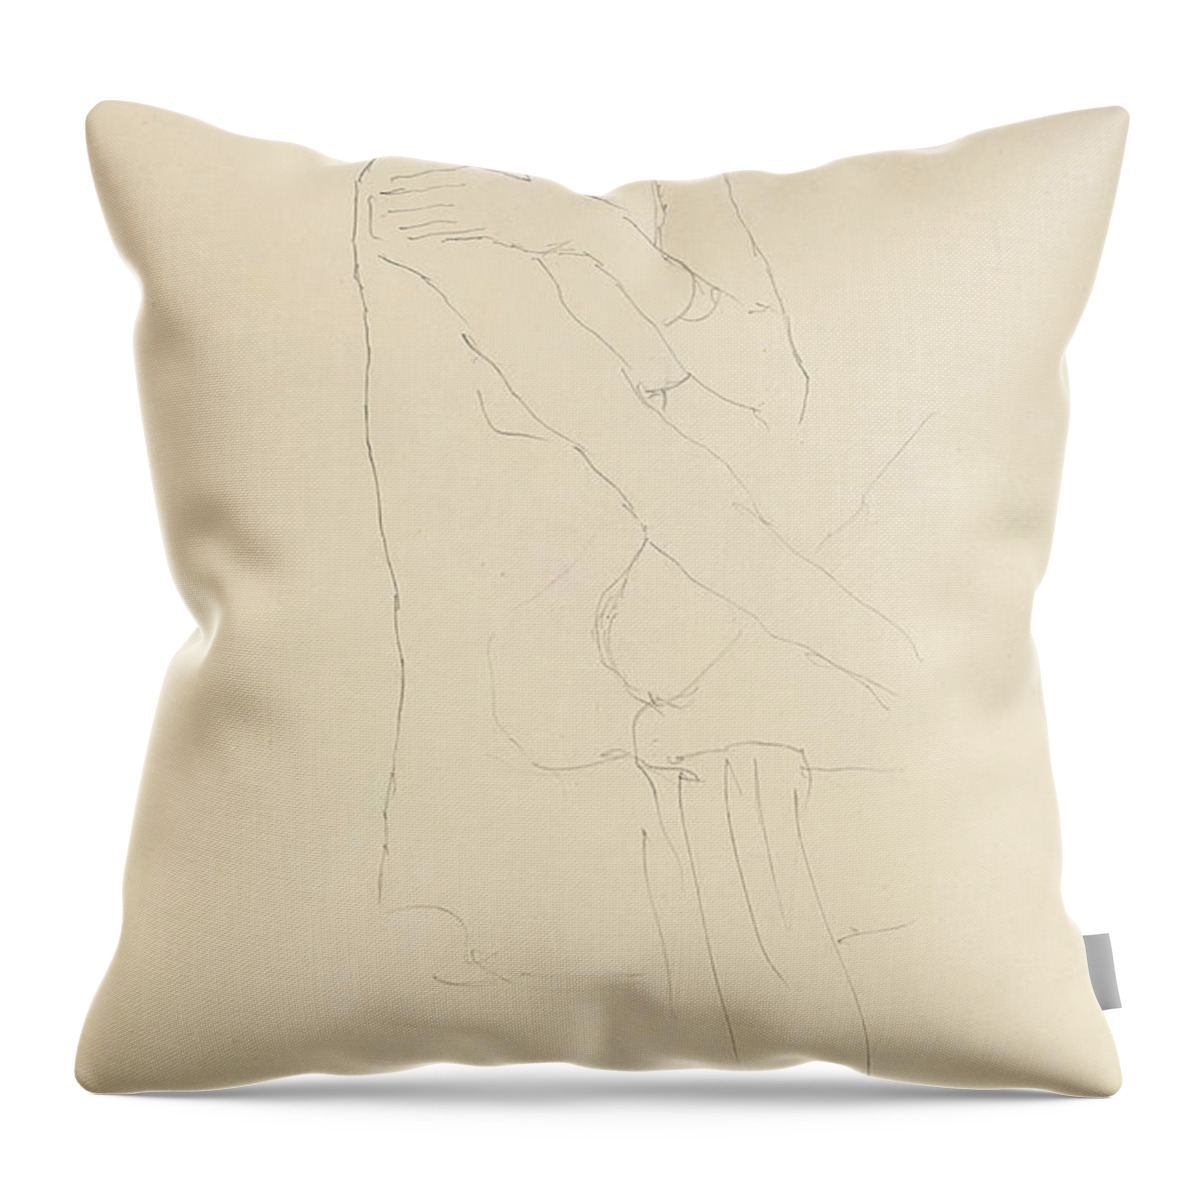 Gustav Klimt Throw Pillow featuring the drawing Study for Adele Bloch Bauer II by Gustav Klimt